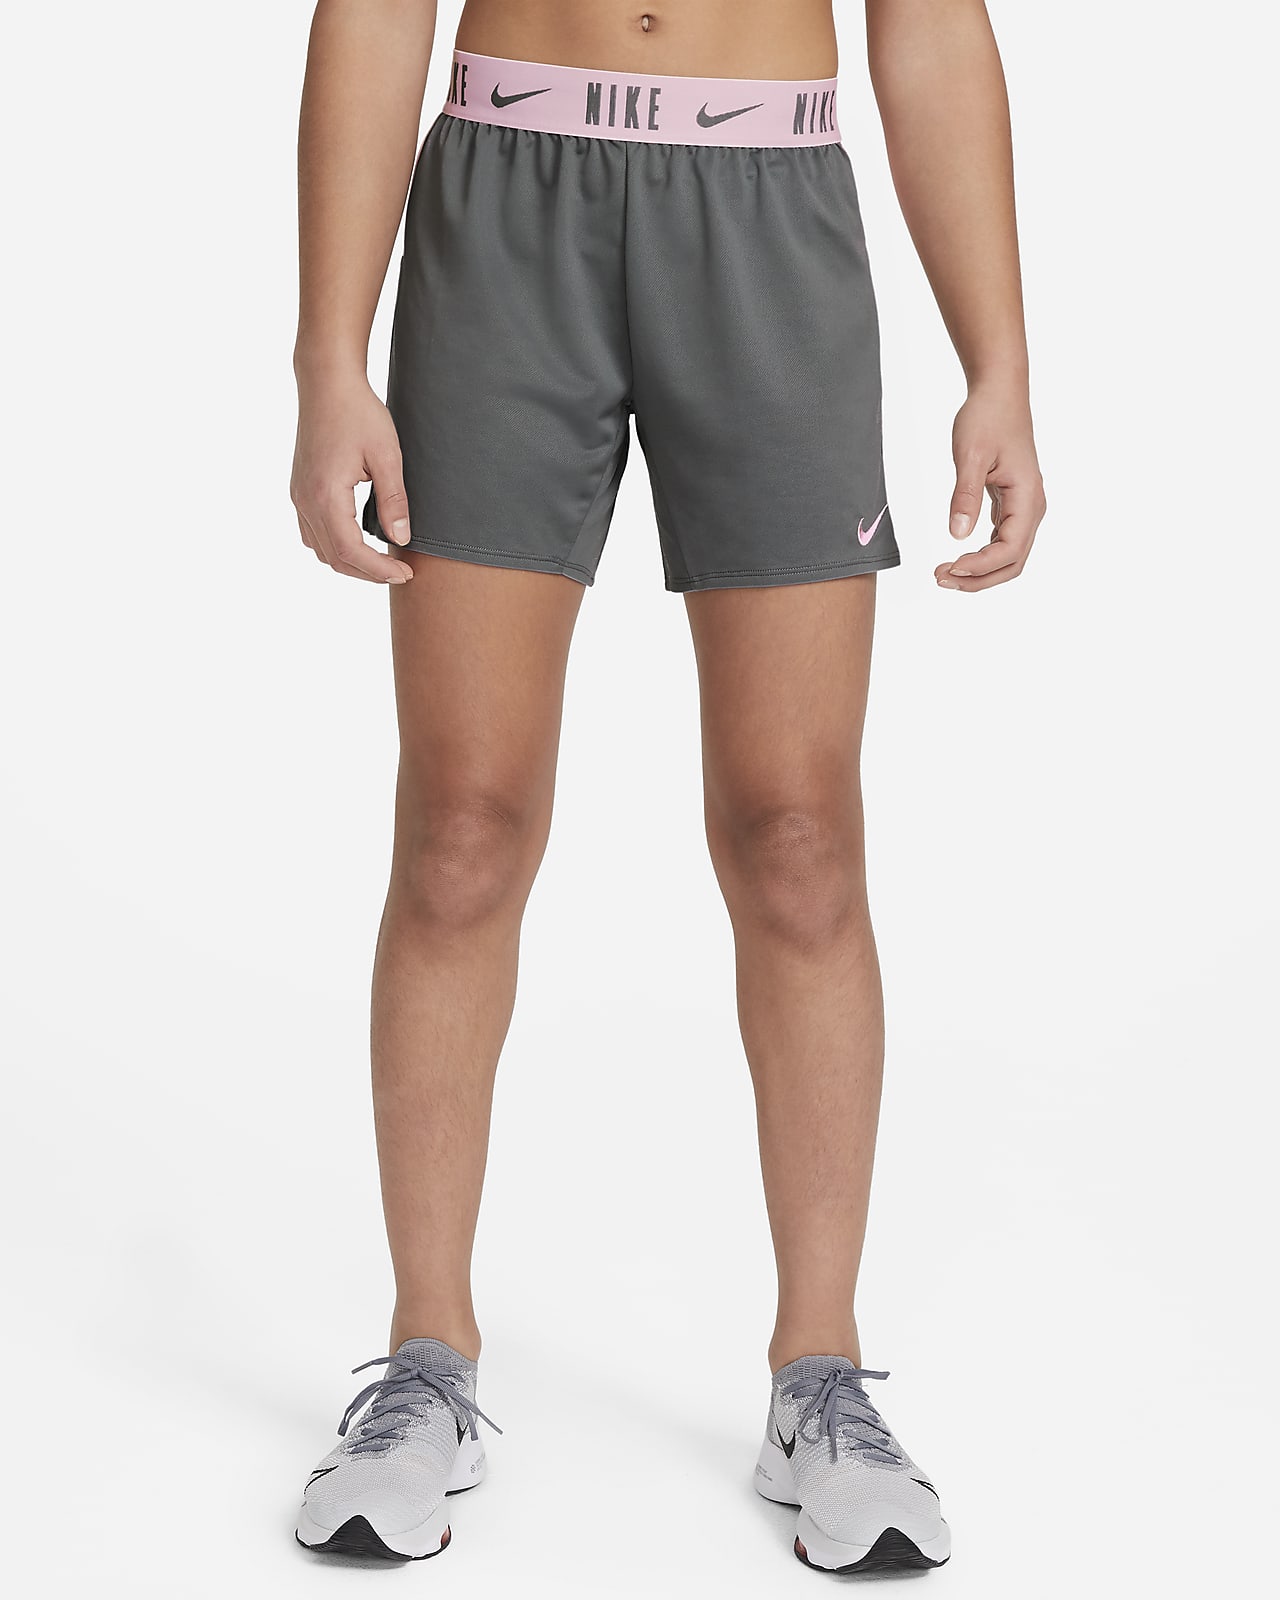 nike grey shorts girls